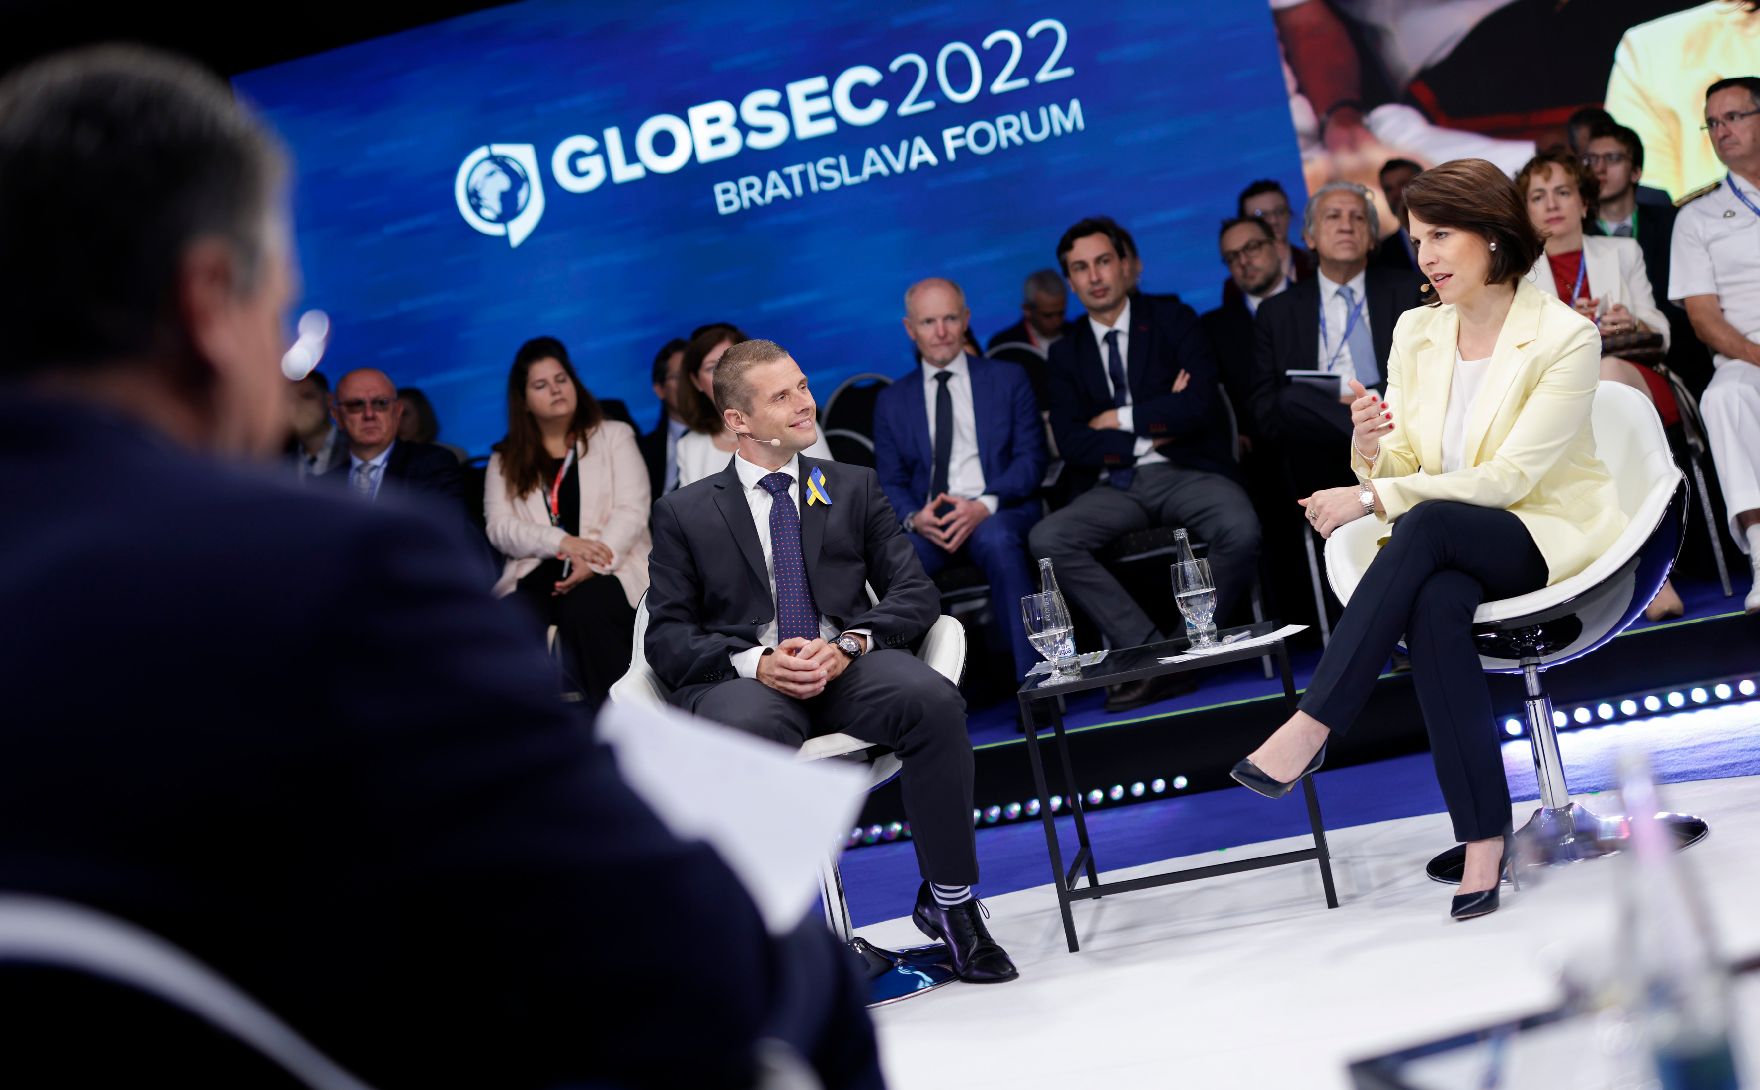 Am 3. Mai 2022 reiste Bundesministerin Karoline Edtstadler (r.) zum GLOBSEC2022 Forum in Bratislava. Im Bild bei der Paneldiskussion.